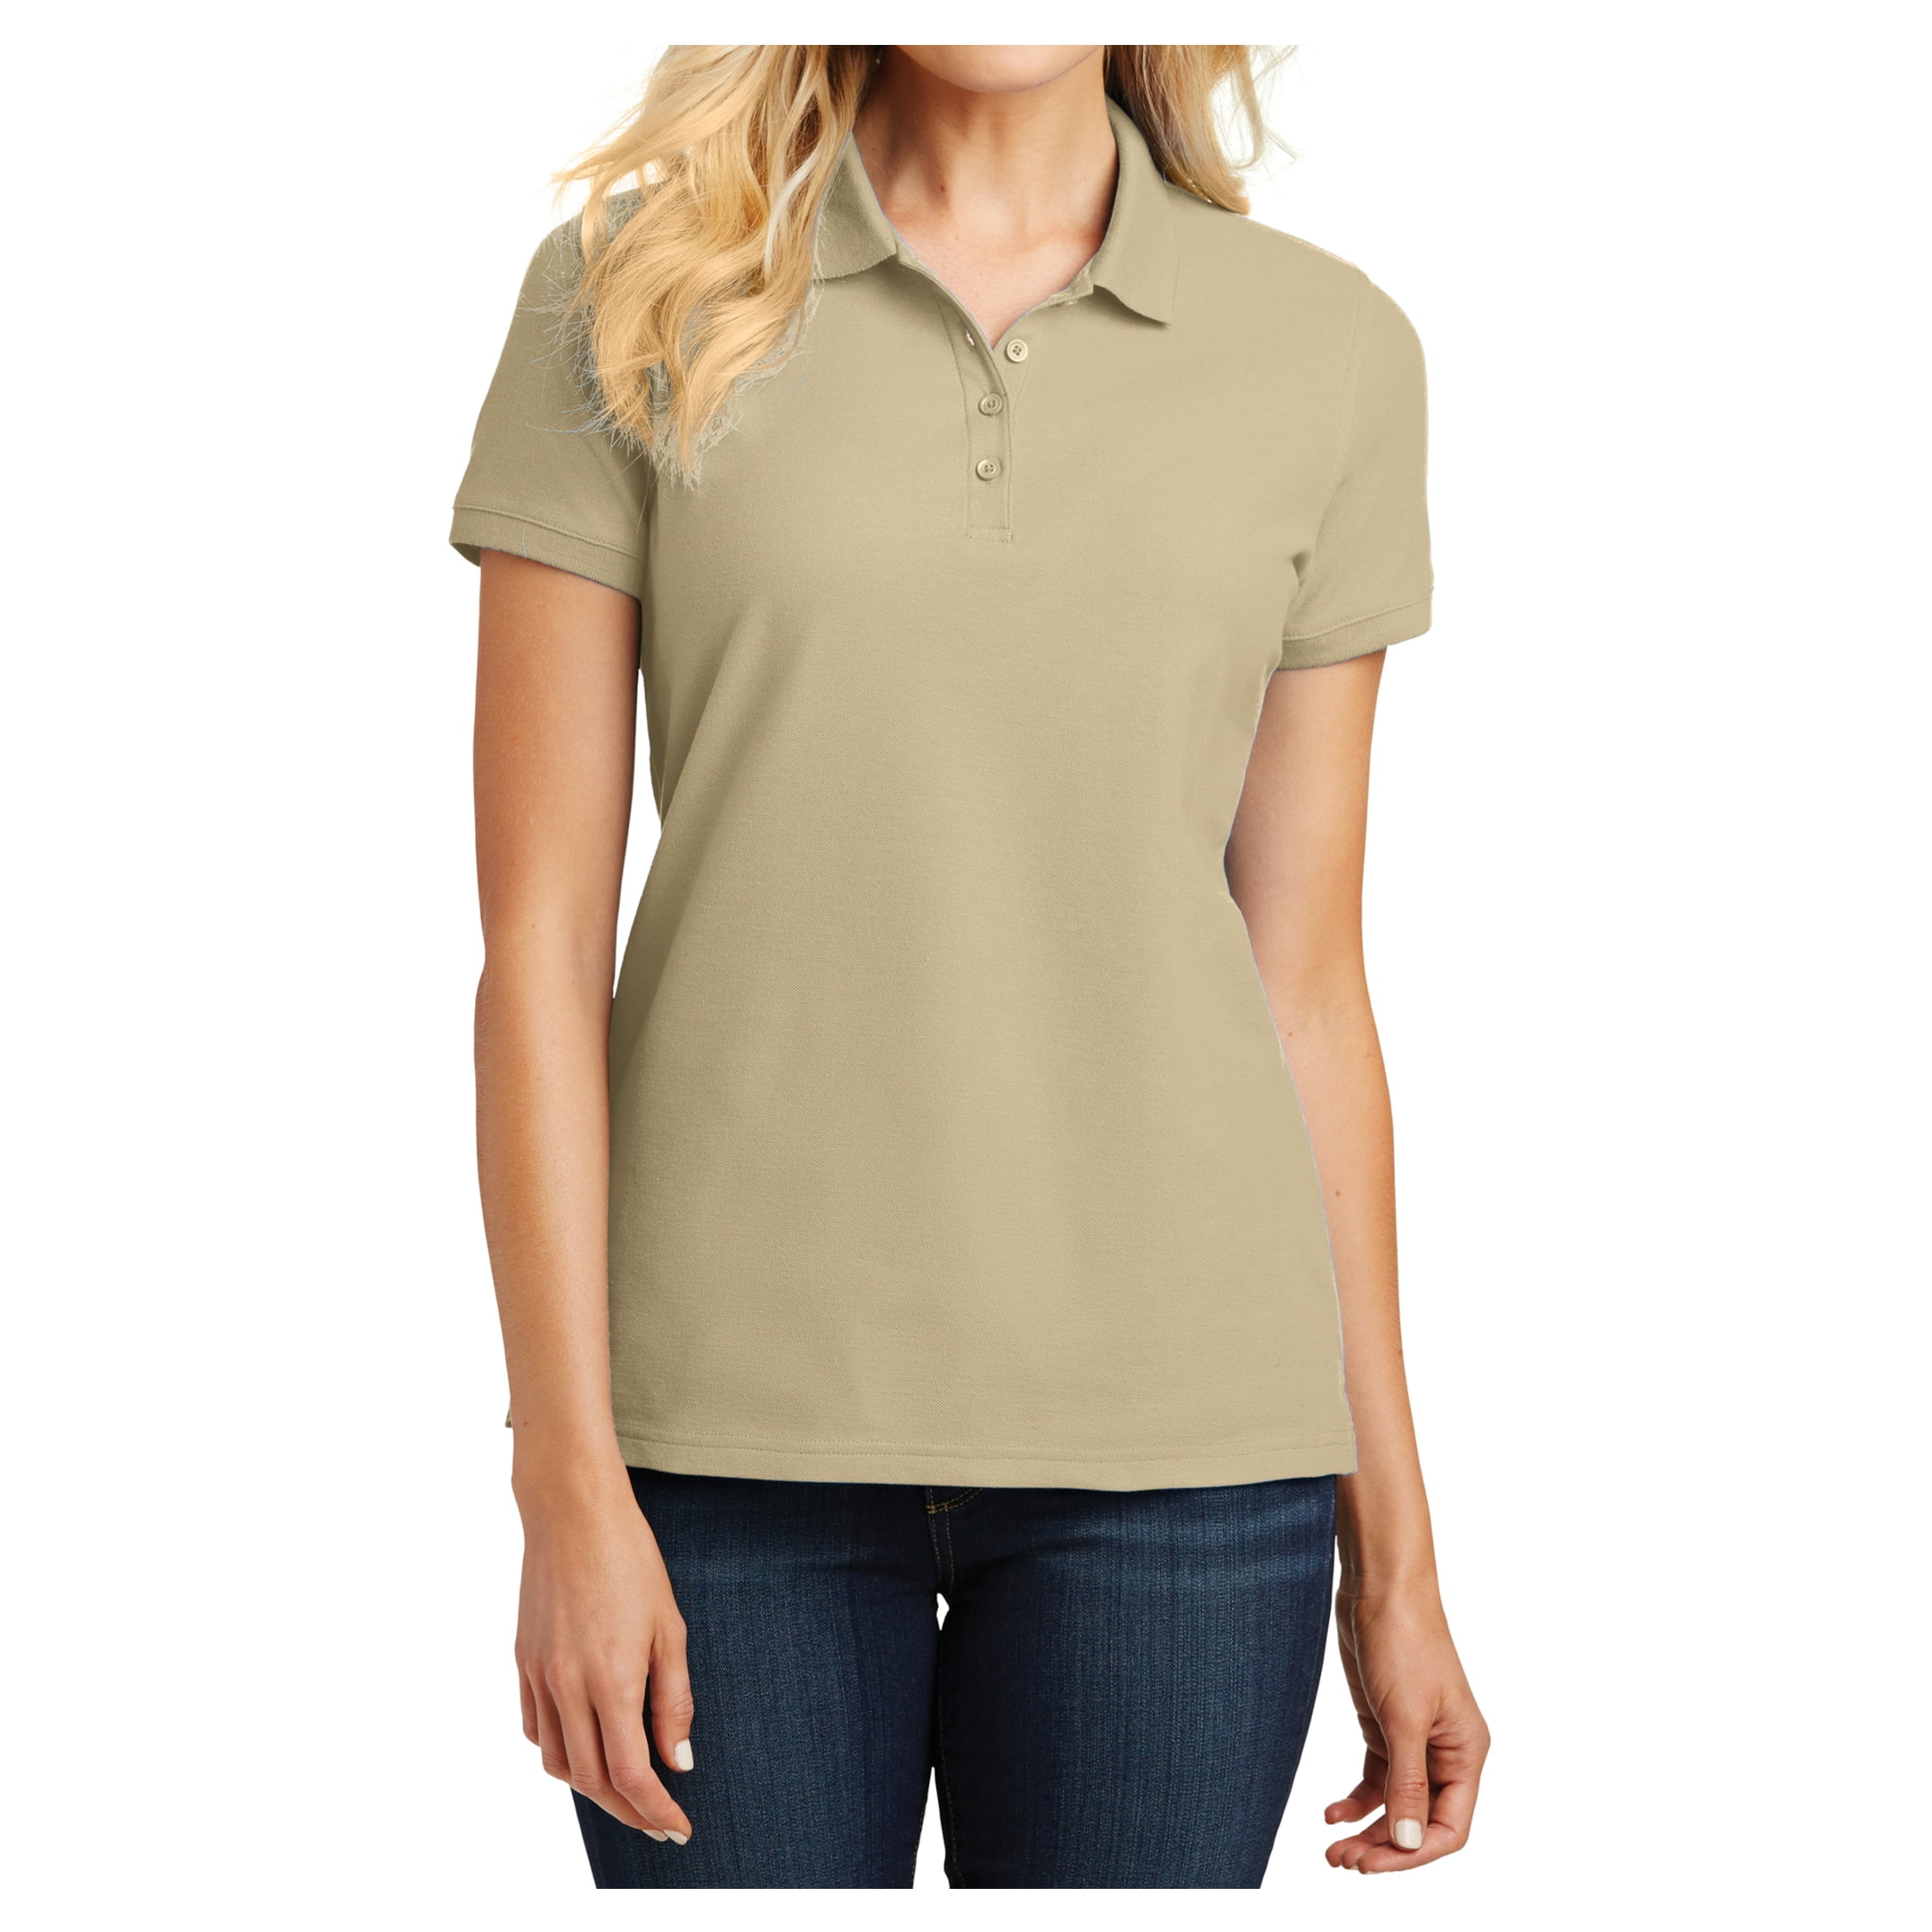 discount 76% WOMEN FASHION Shirts & T-shirts Lace openwork Brown M Pimkie blouse 